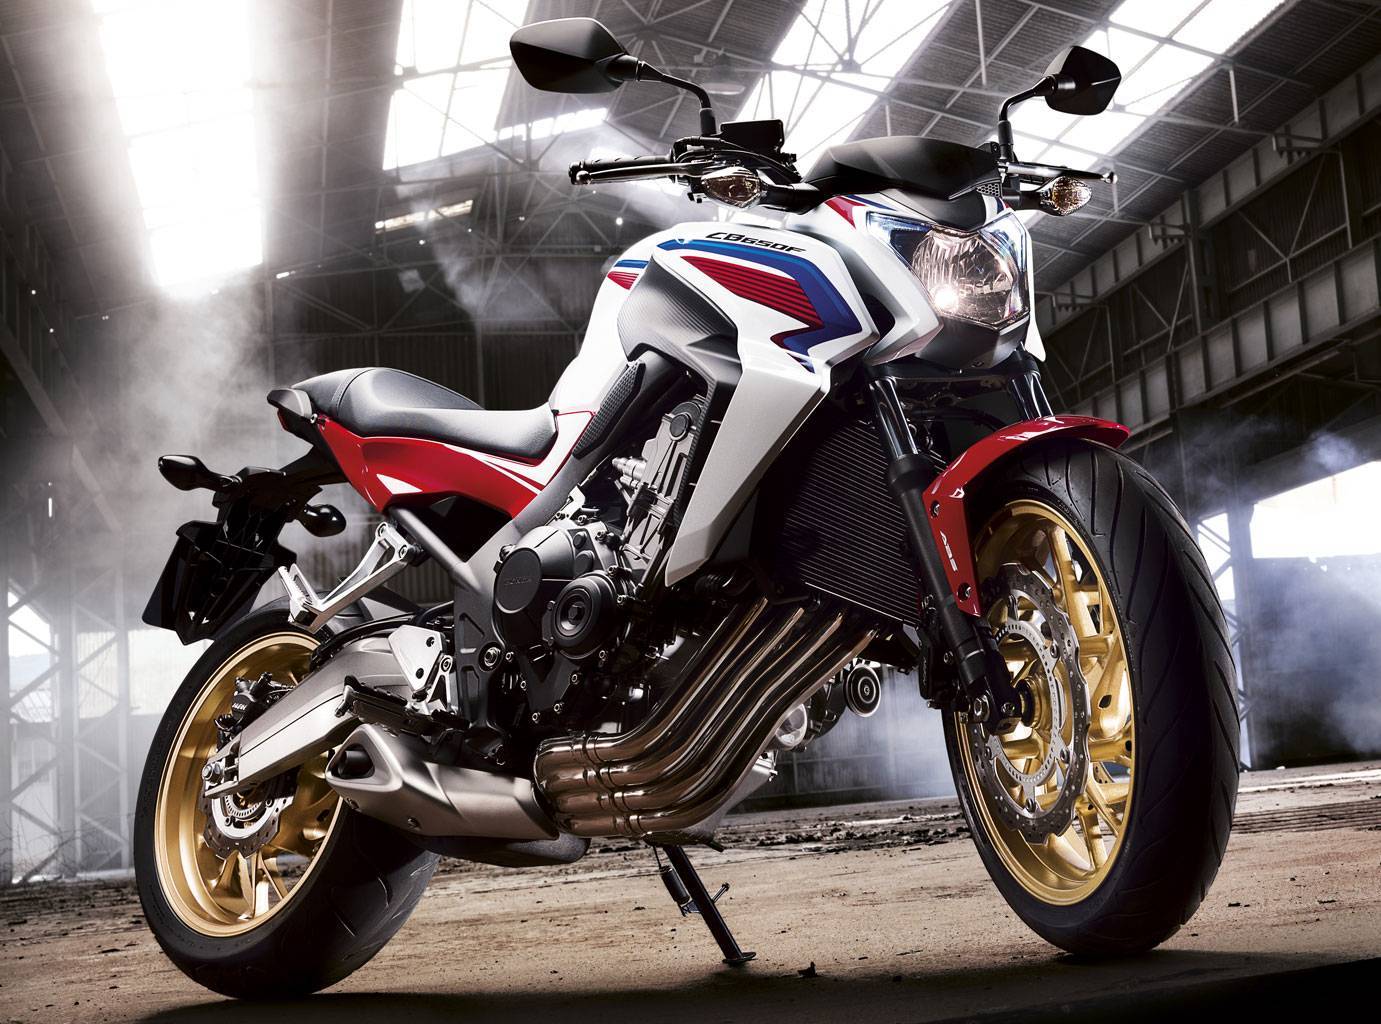 Мотоцикл honda cb 400: технические характеристики и краткий обзор модели